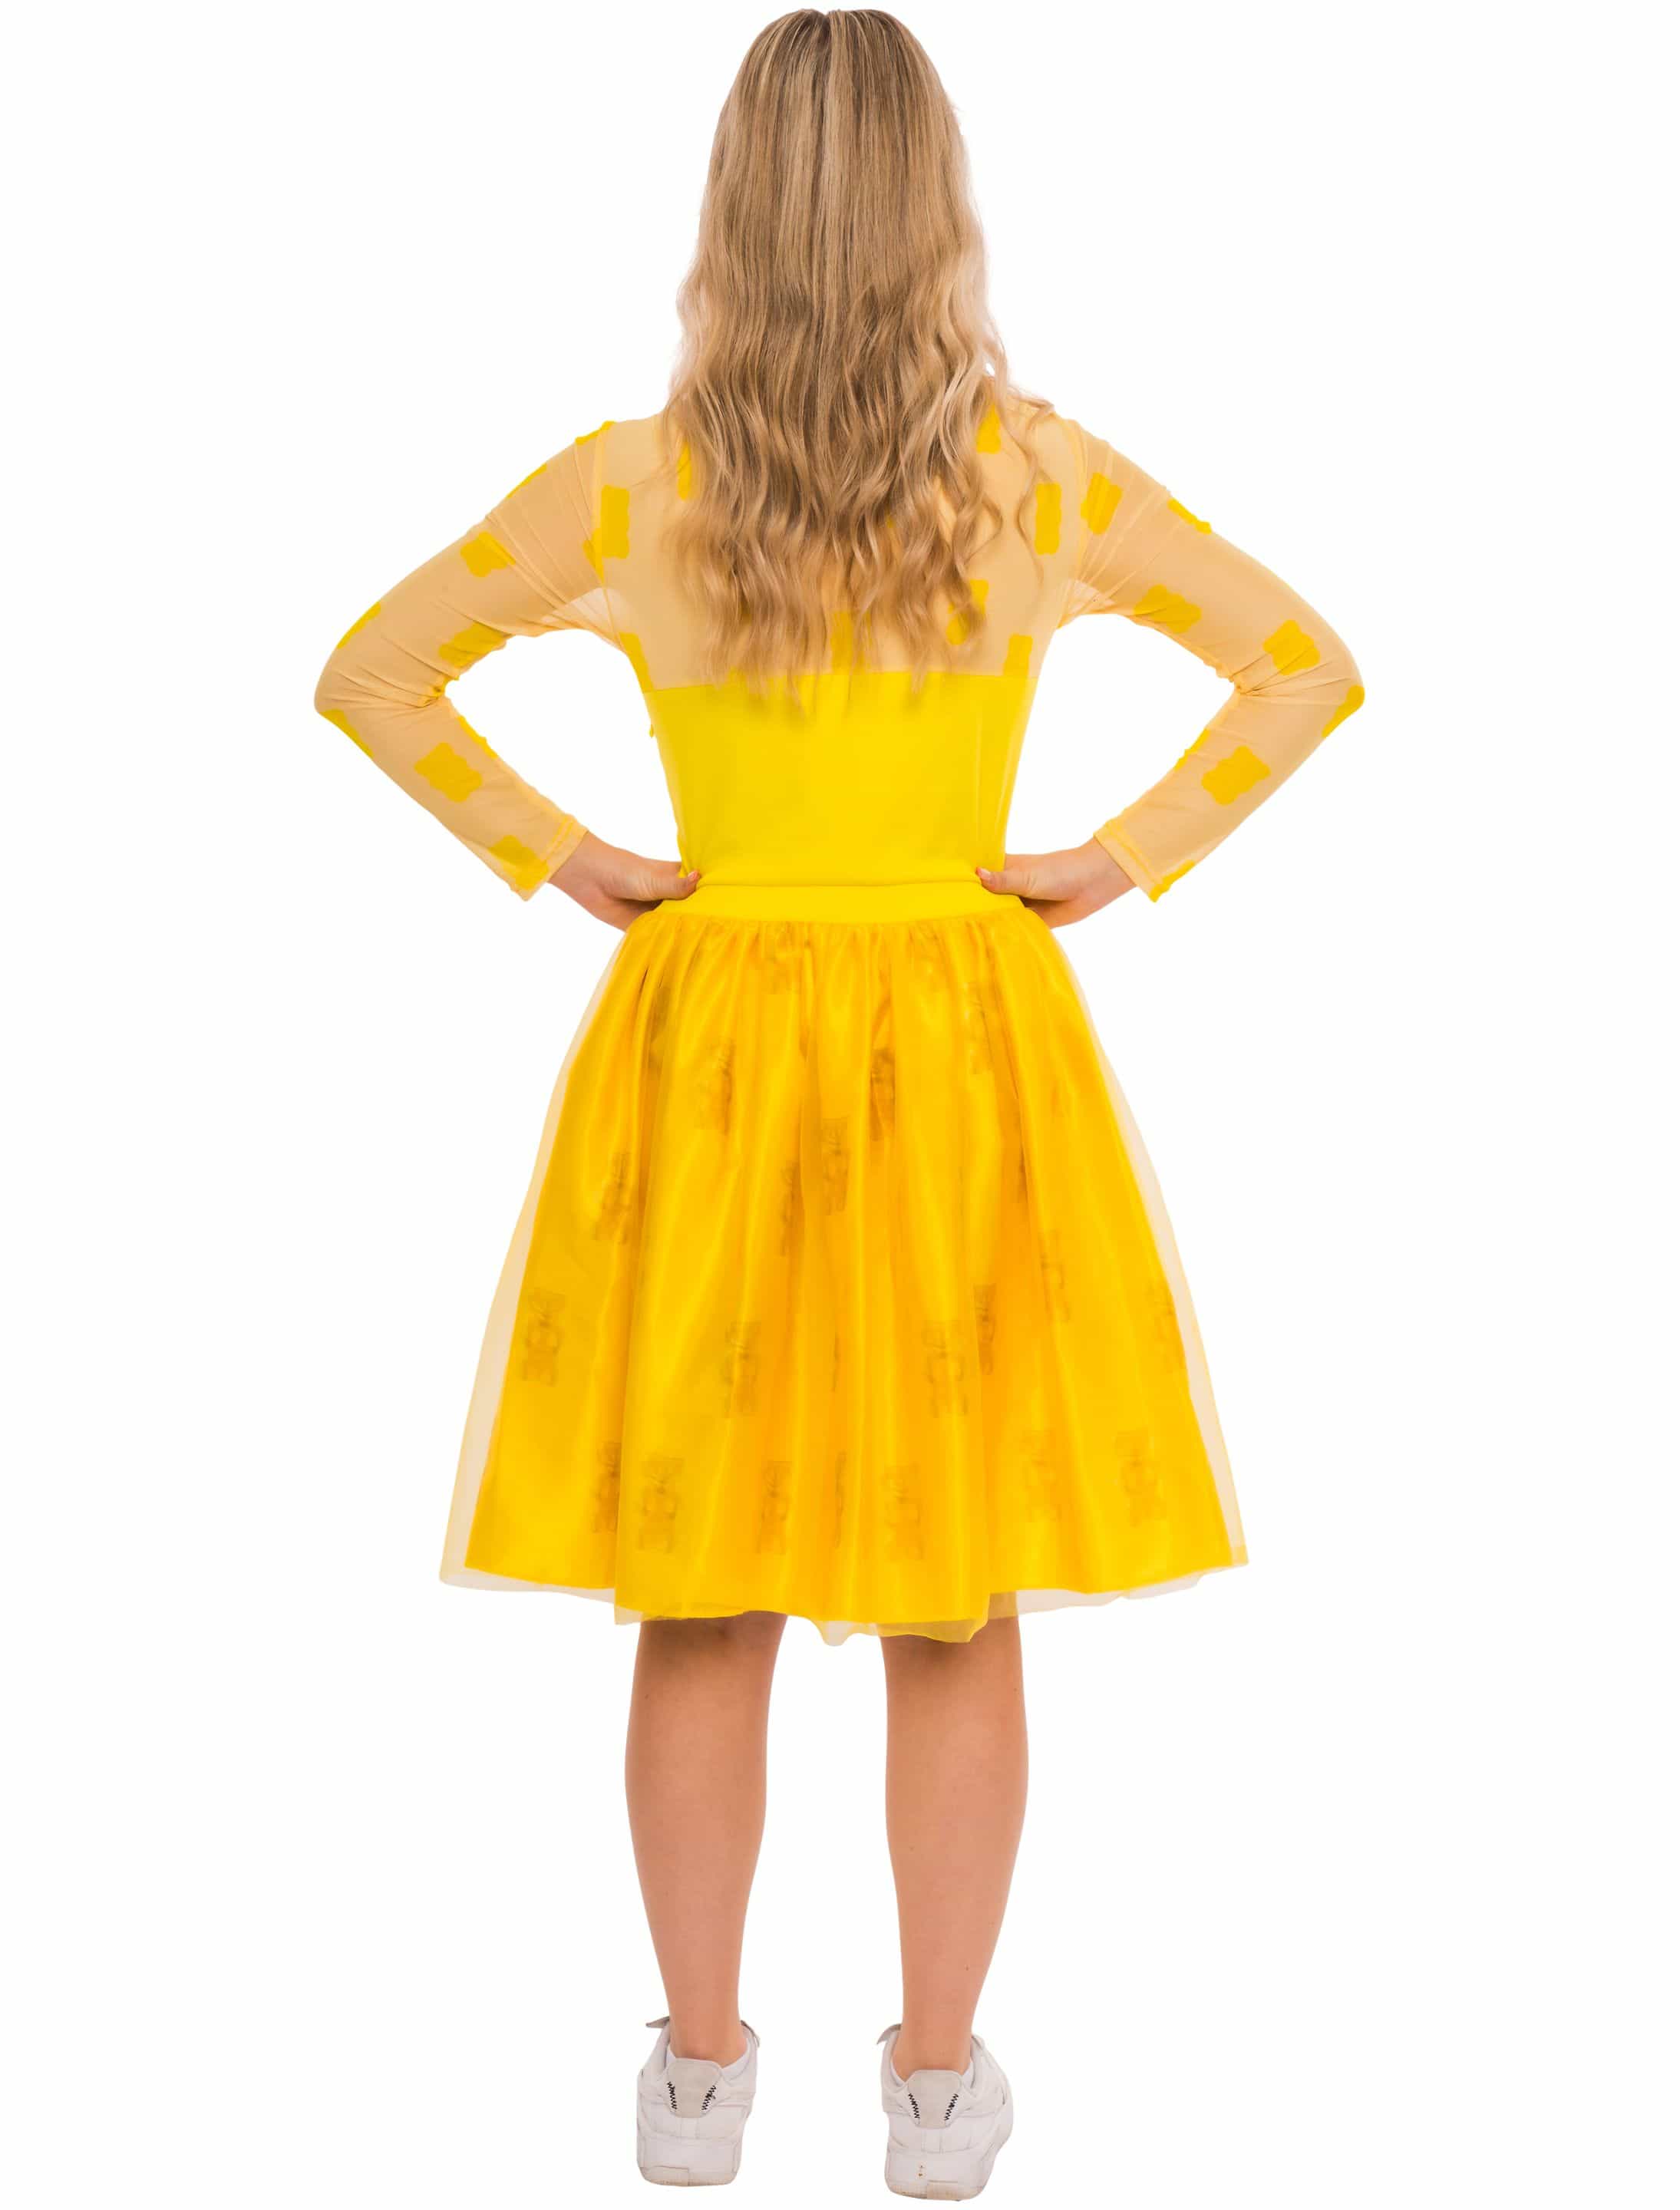 Kleid HARIBO Goldbären Damen gelb XS